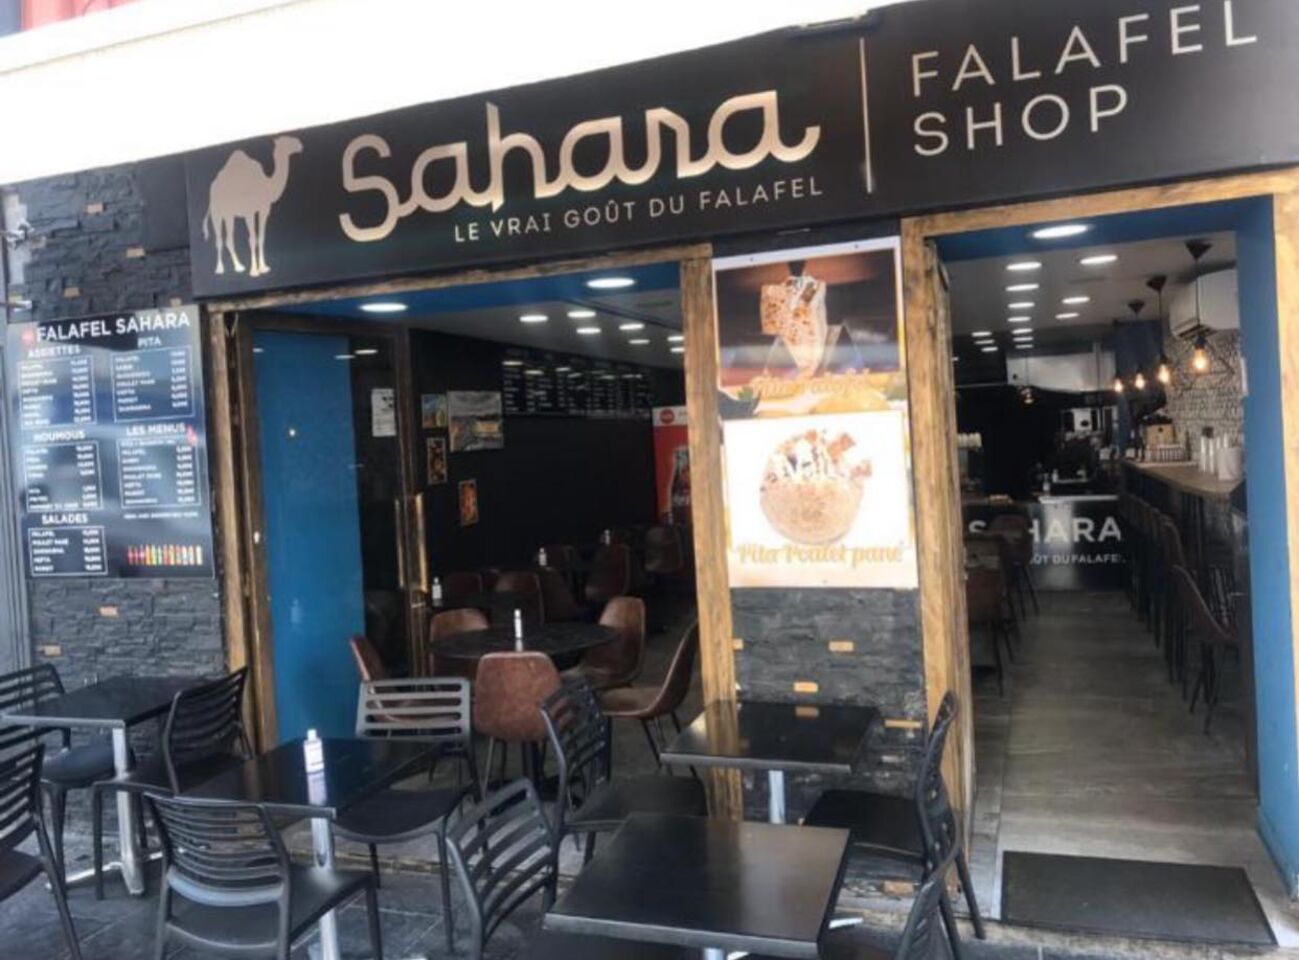 A photo of Falafel Sahara